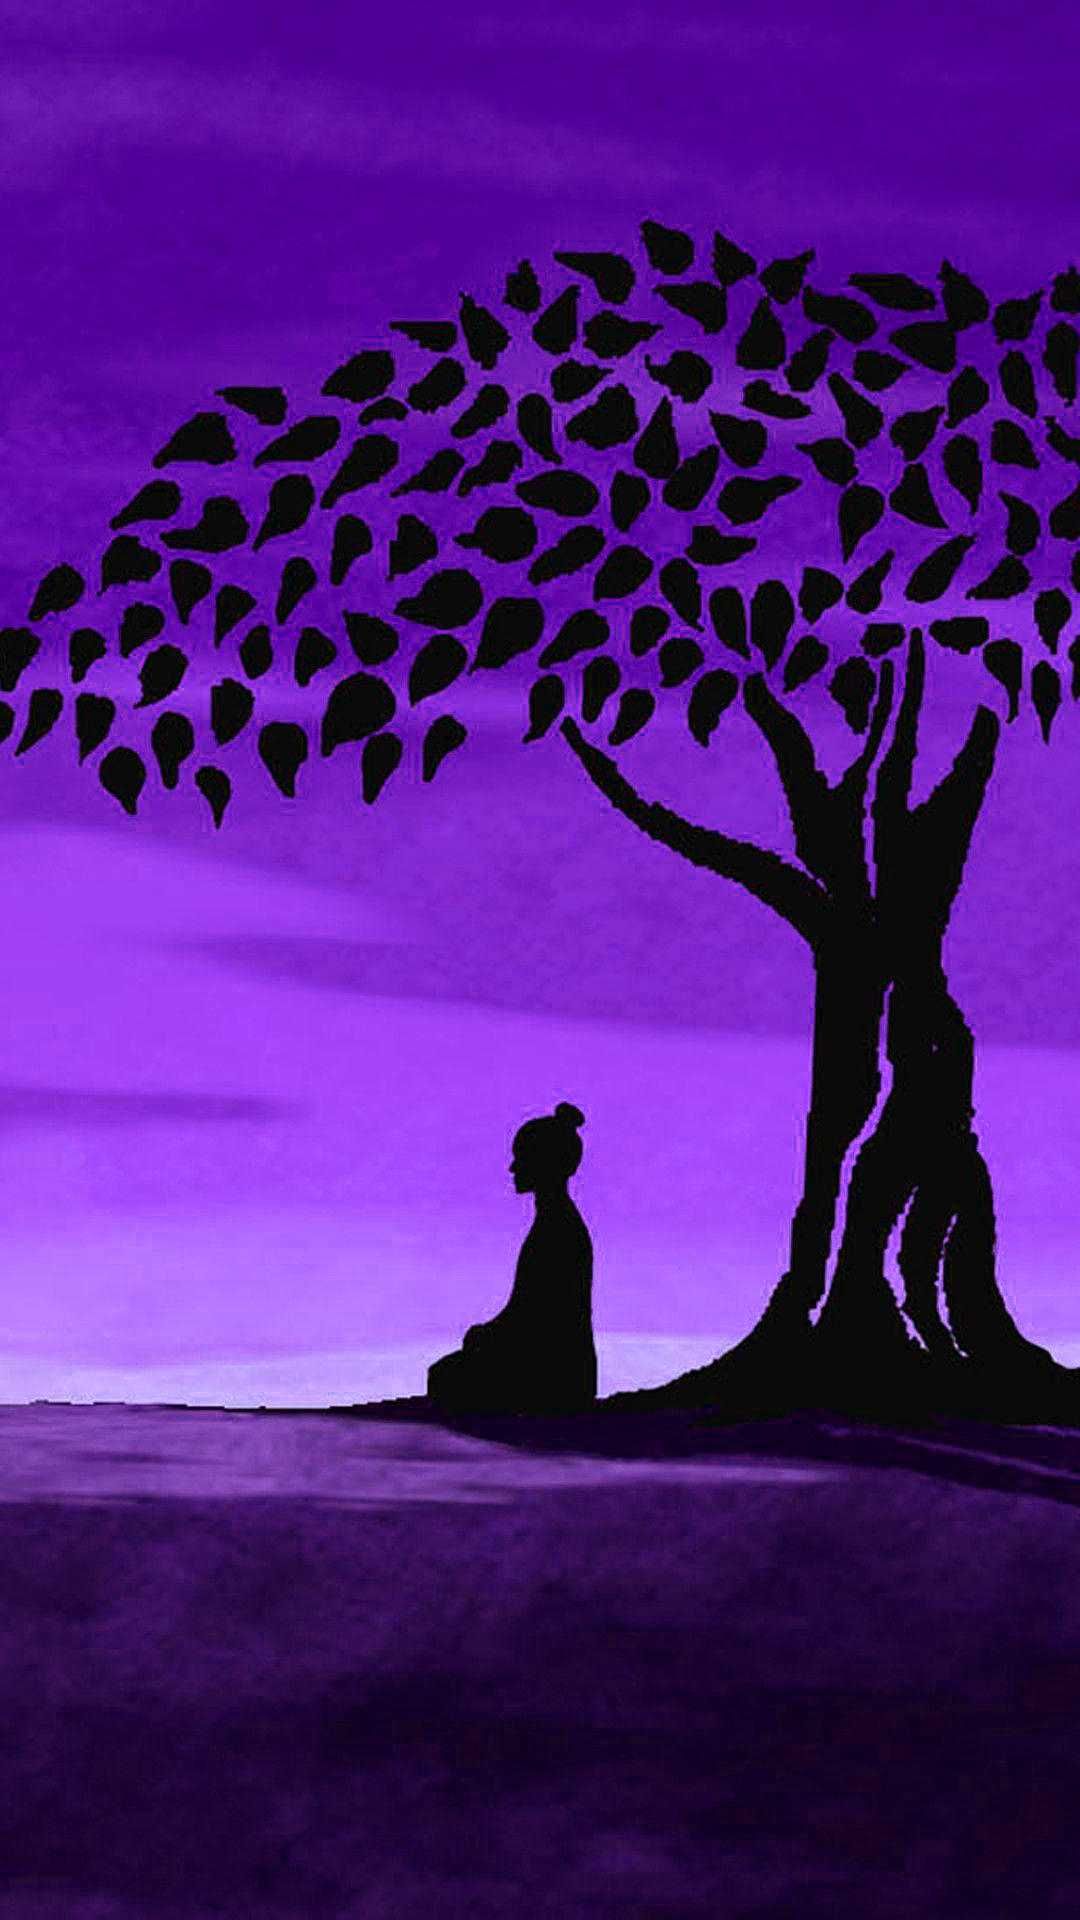 Purple spiritual wallpaper for mobile phone - Spiritual